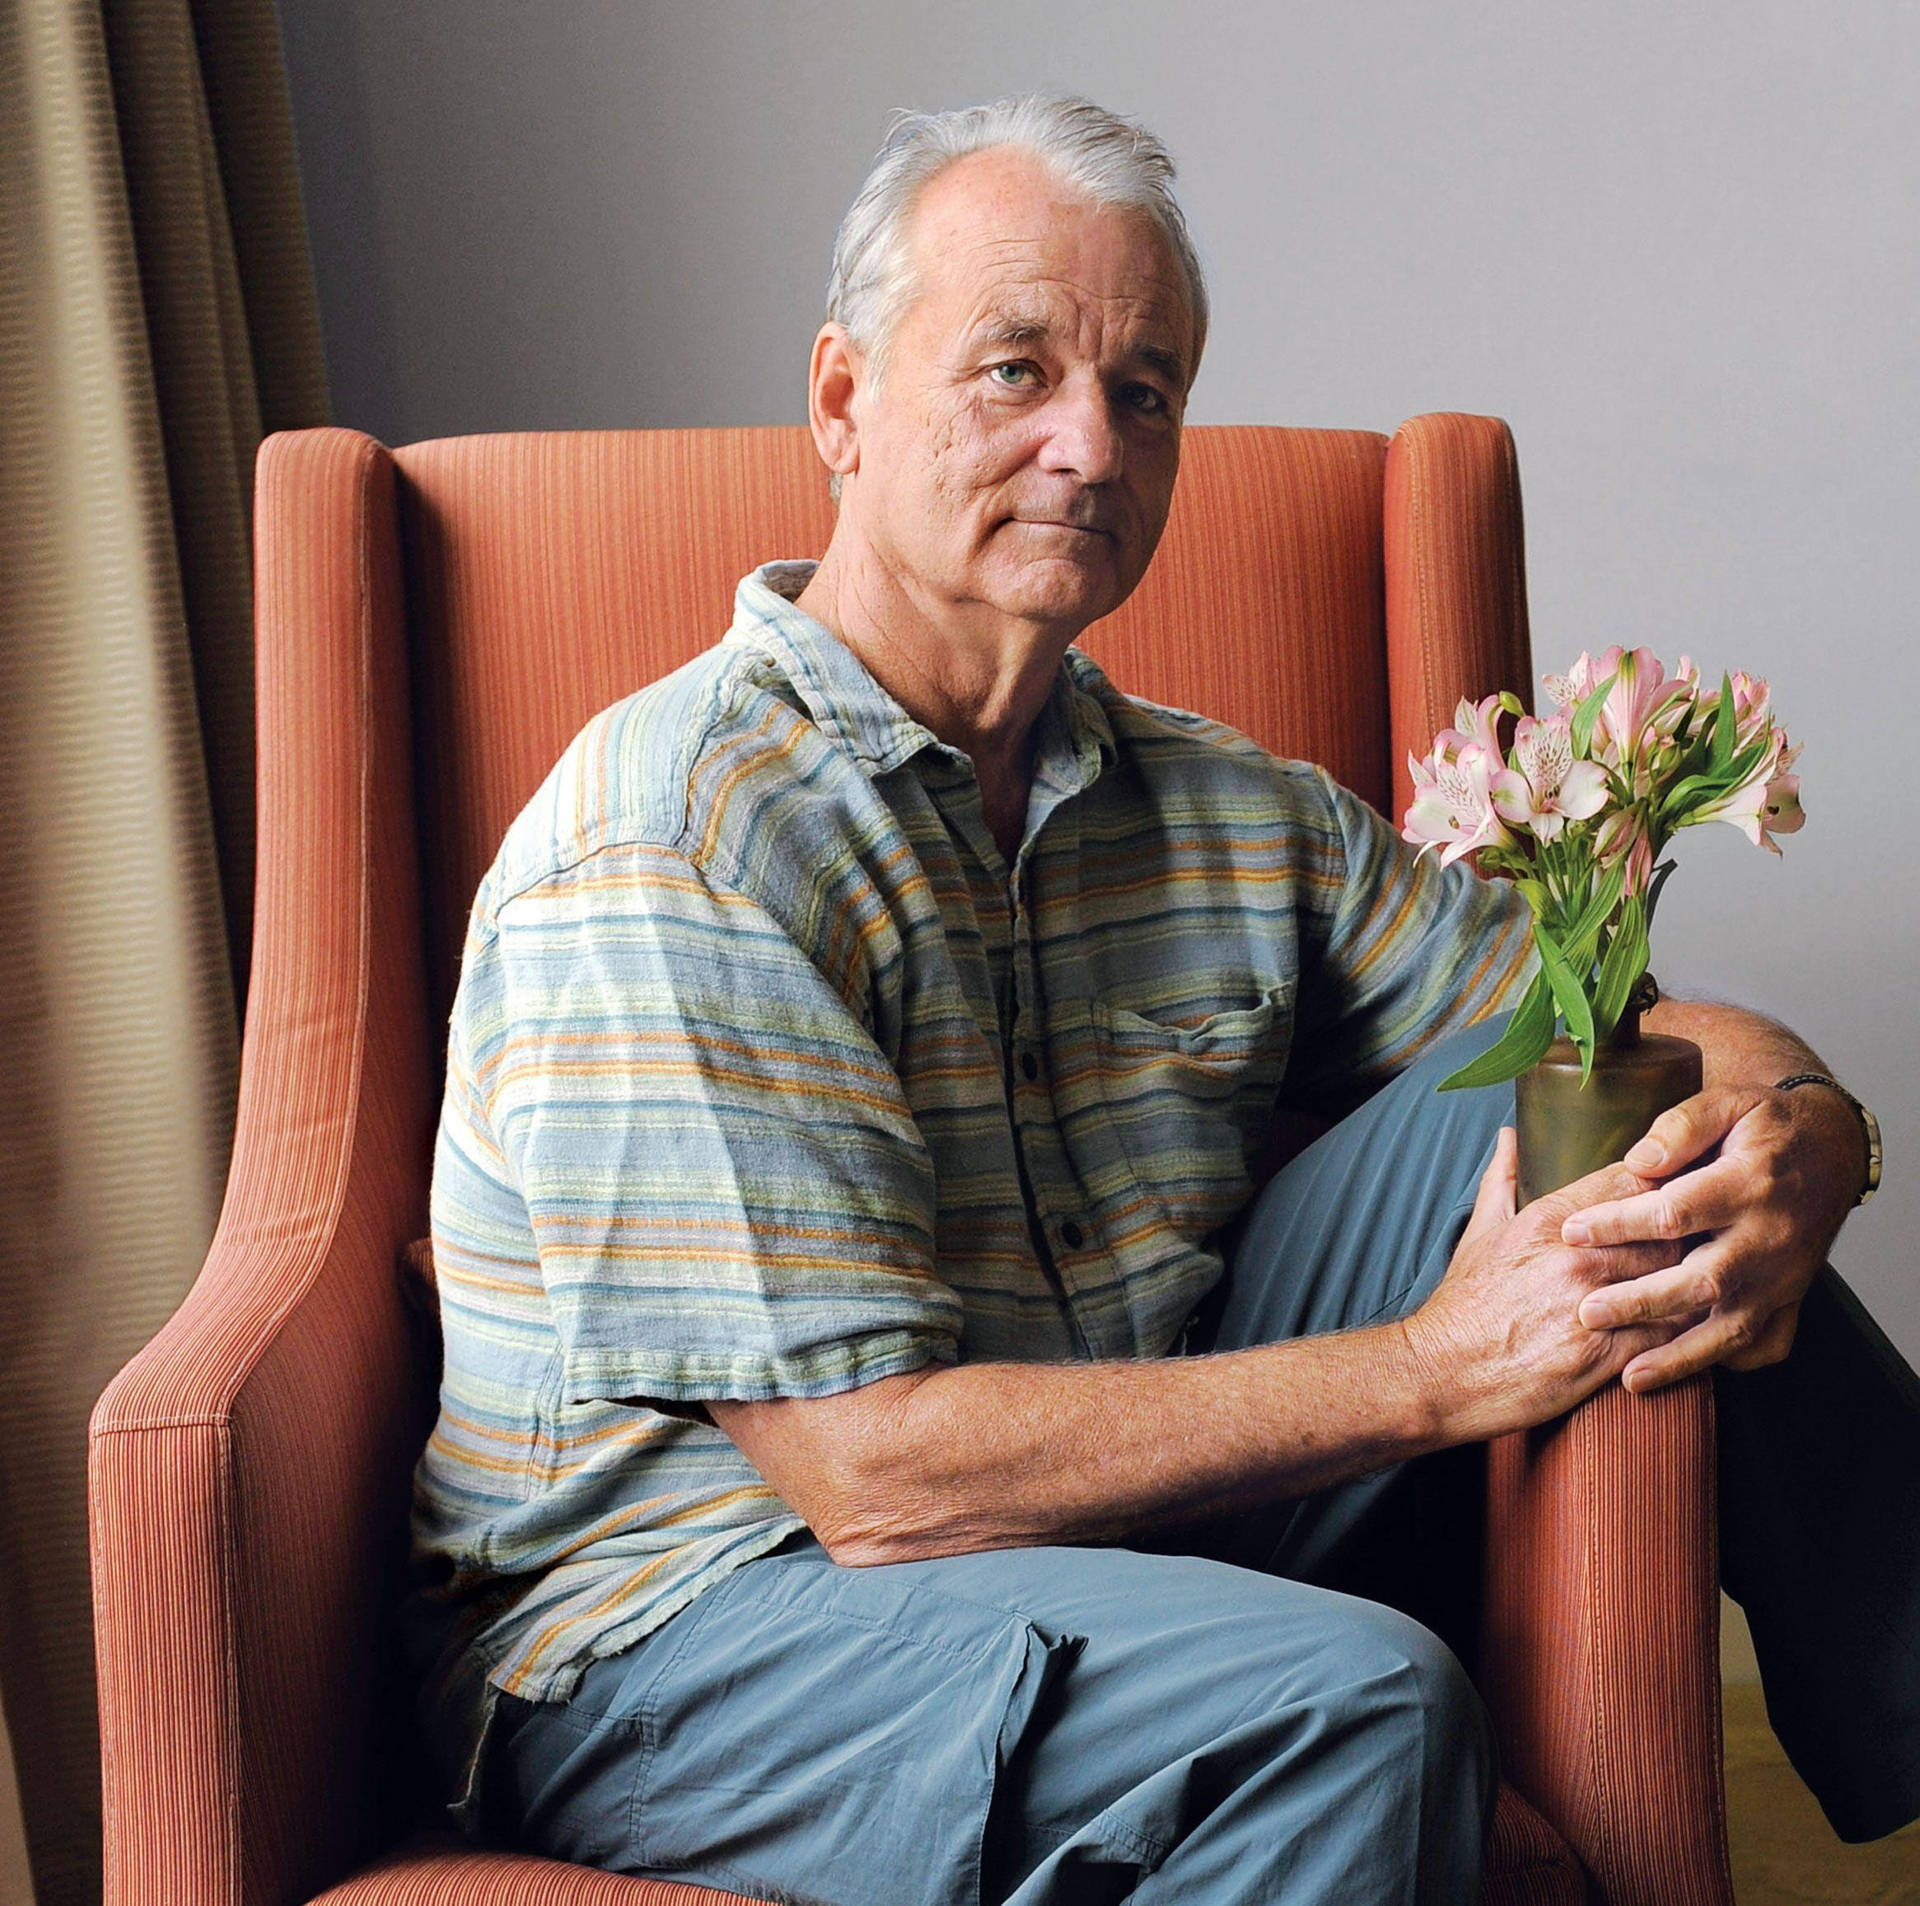 Bill Murray Sitting Chair Flowers Hotel Background